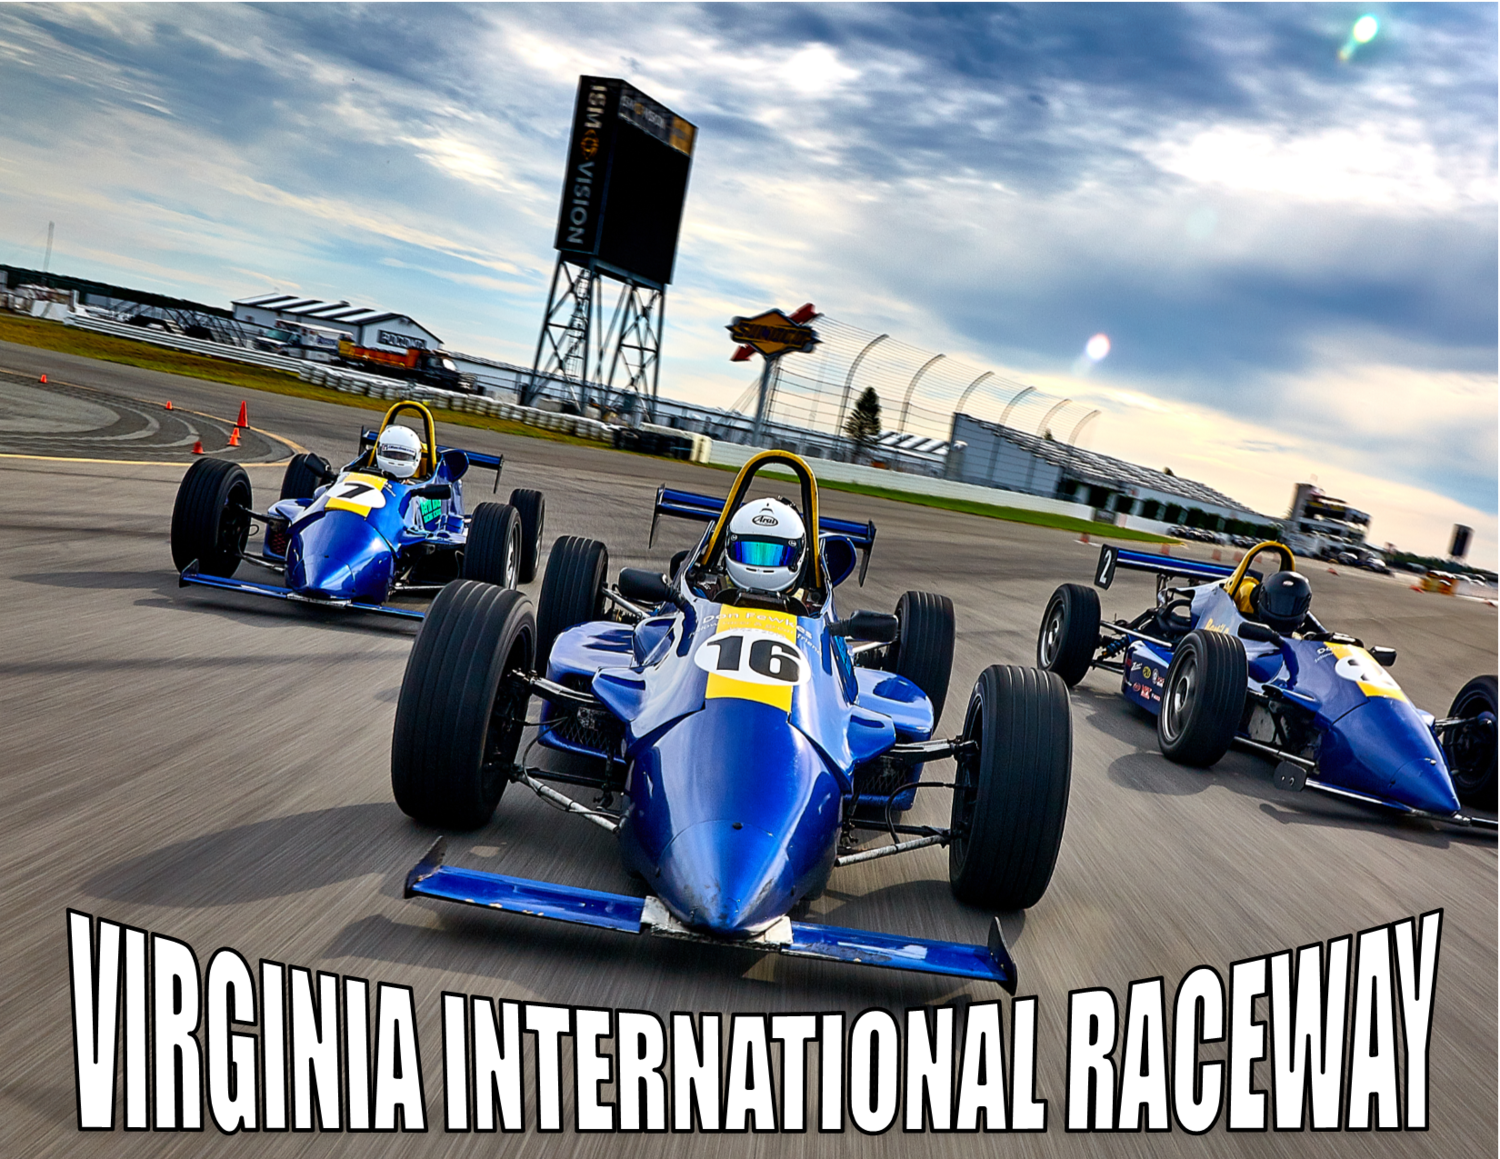 Virginia International Raceway - AM Lapping/Practice Session